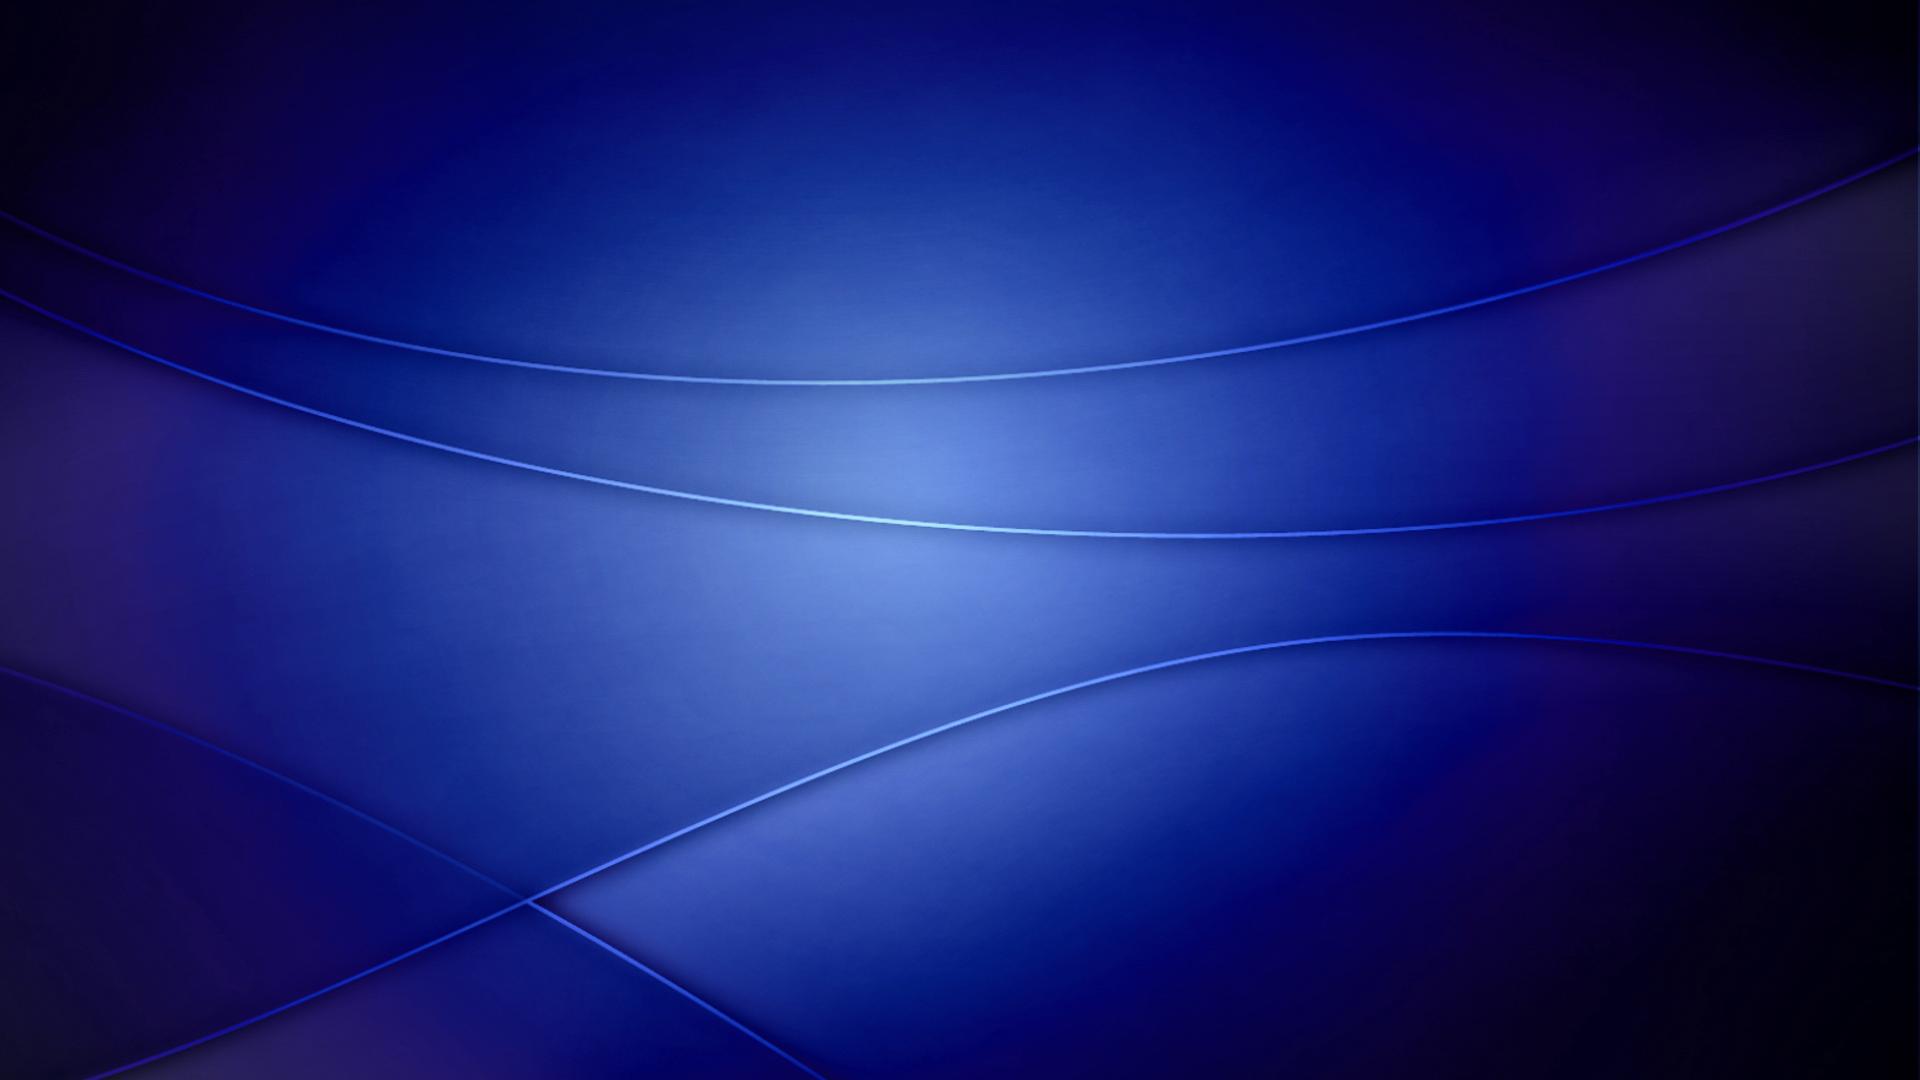 Background Windows Blue Desktop Wallpaper Lines Image Xdqwc